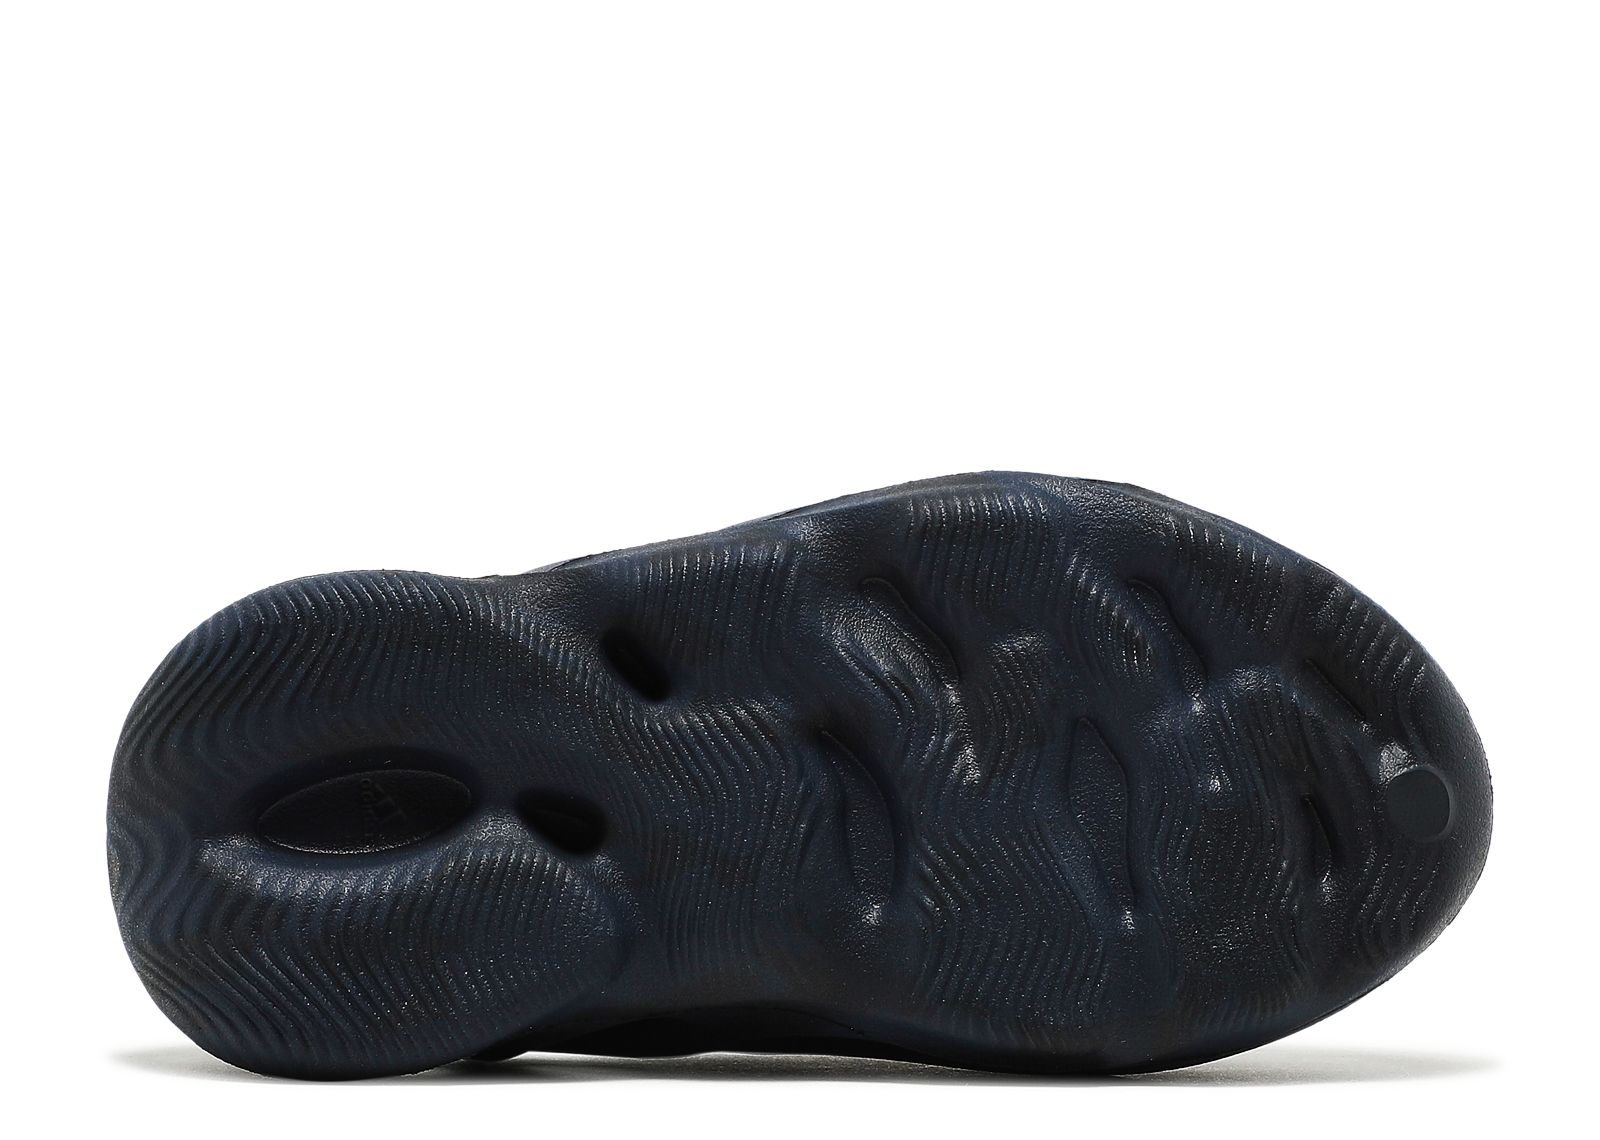 Adidas Foam Runner Infants 'Mineral Blue' - Size 8K